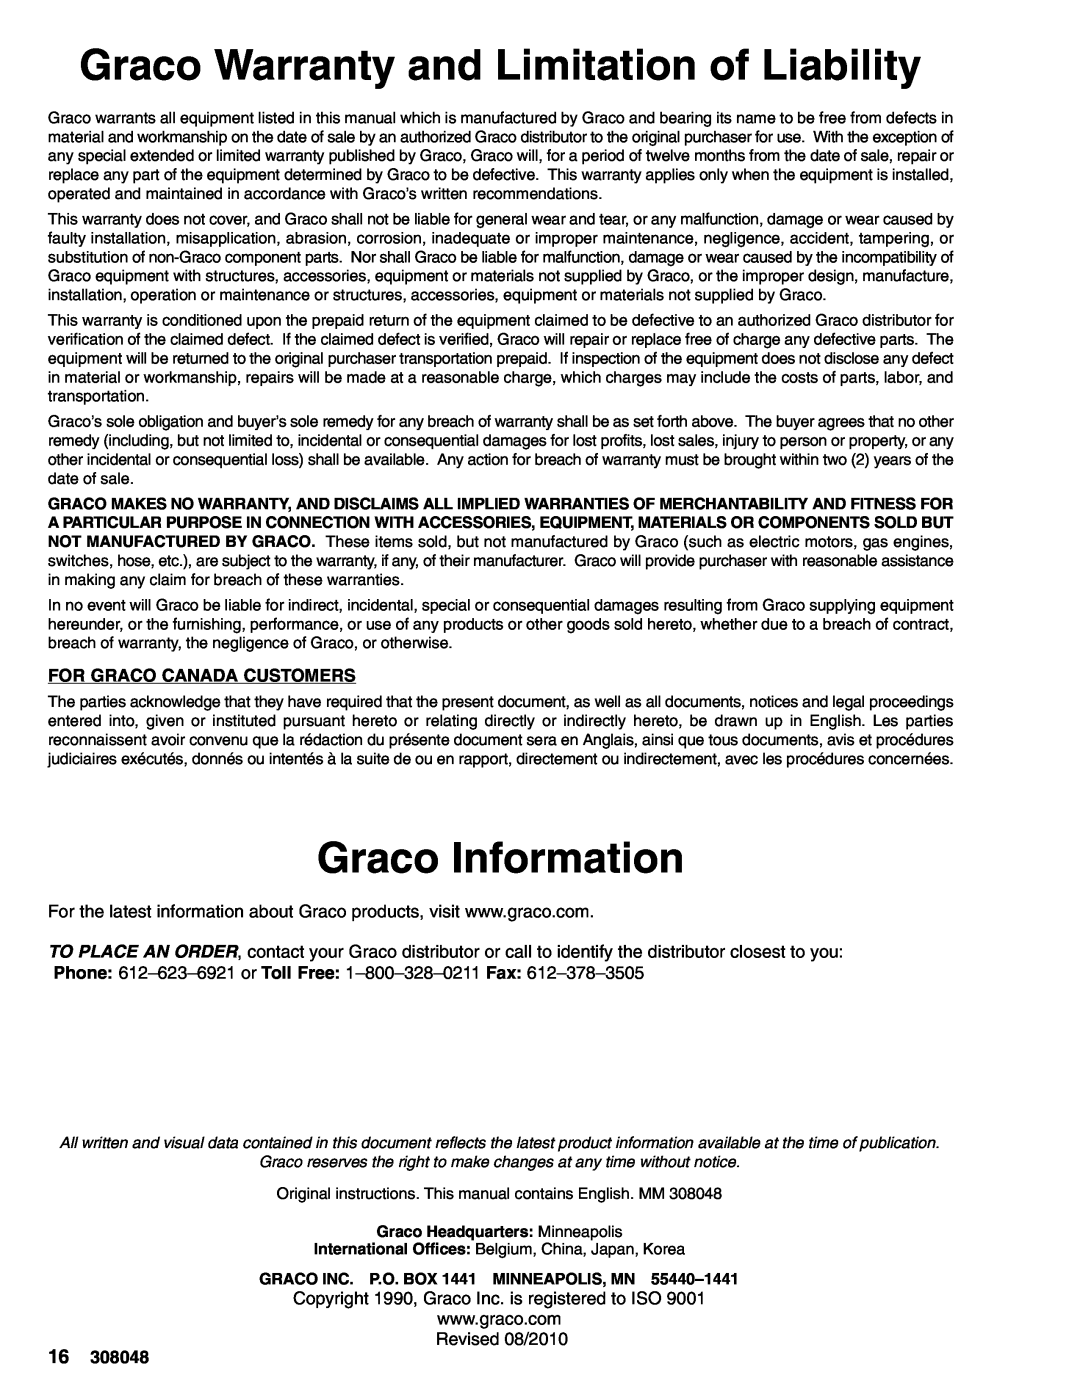 Graco 223646 Graco Warranty and Limitation of Liability, Graco Information, Graco Headquarters Minneapolis 